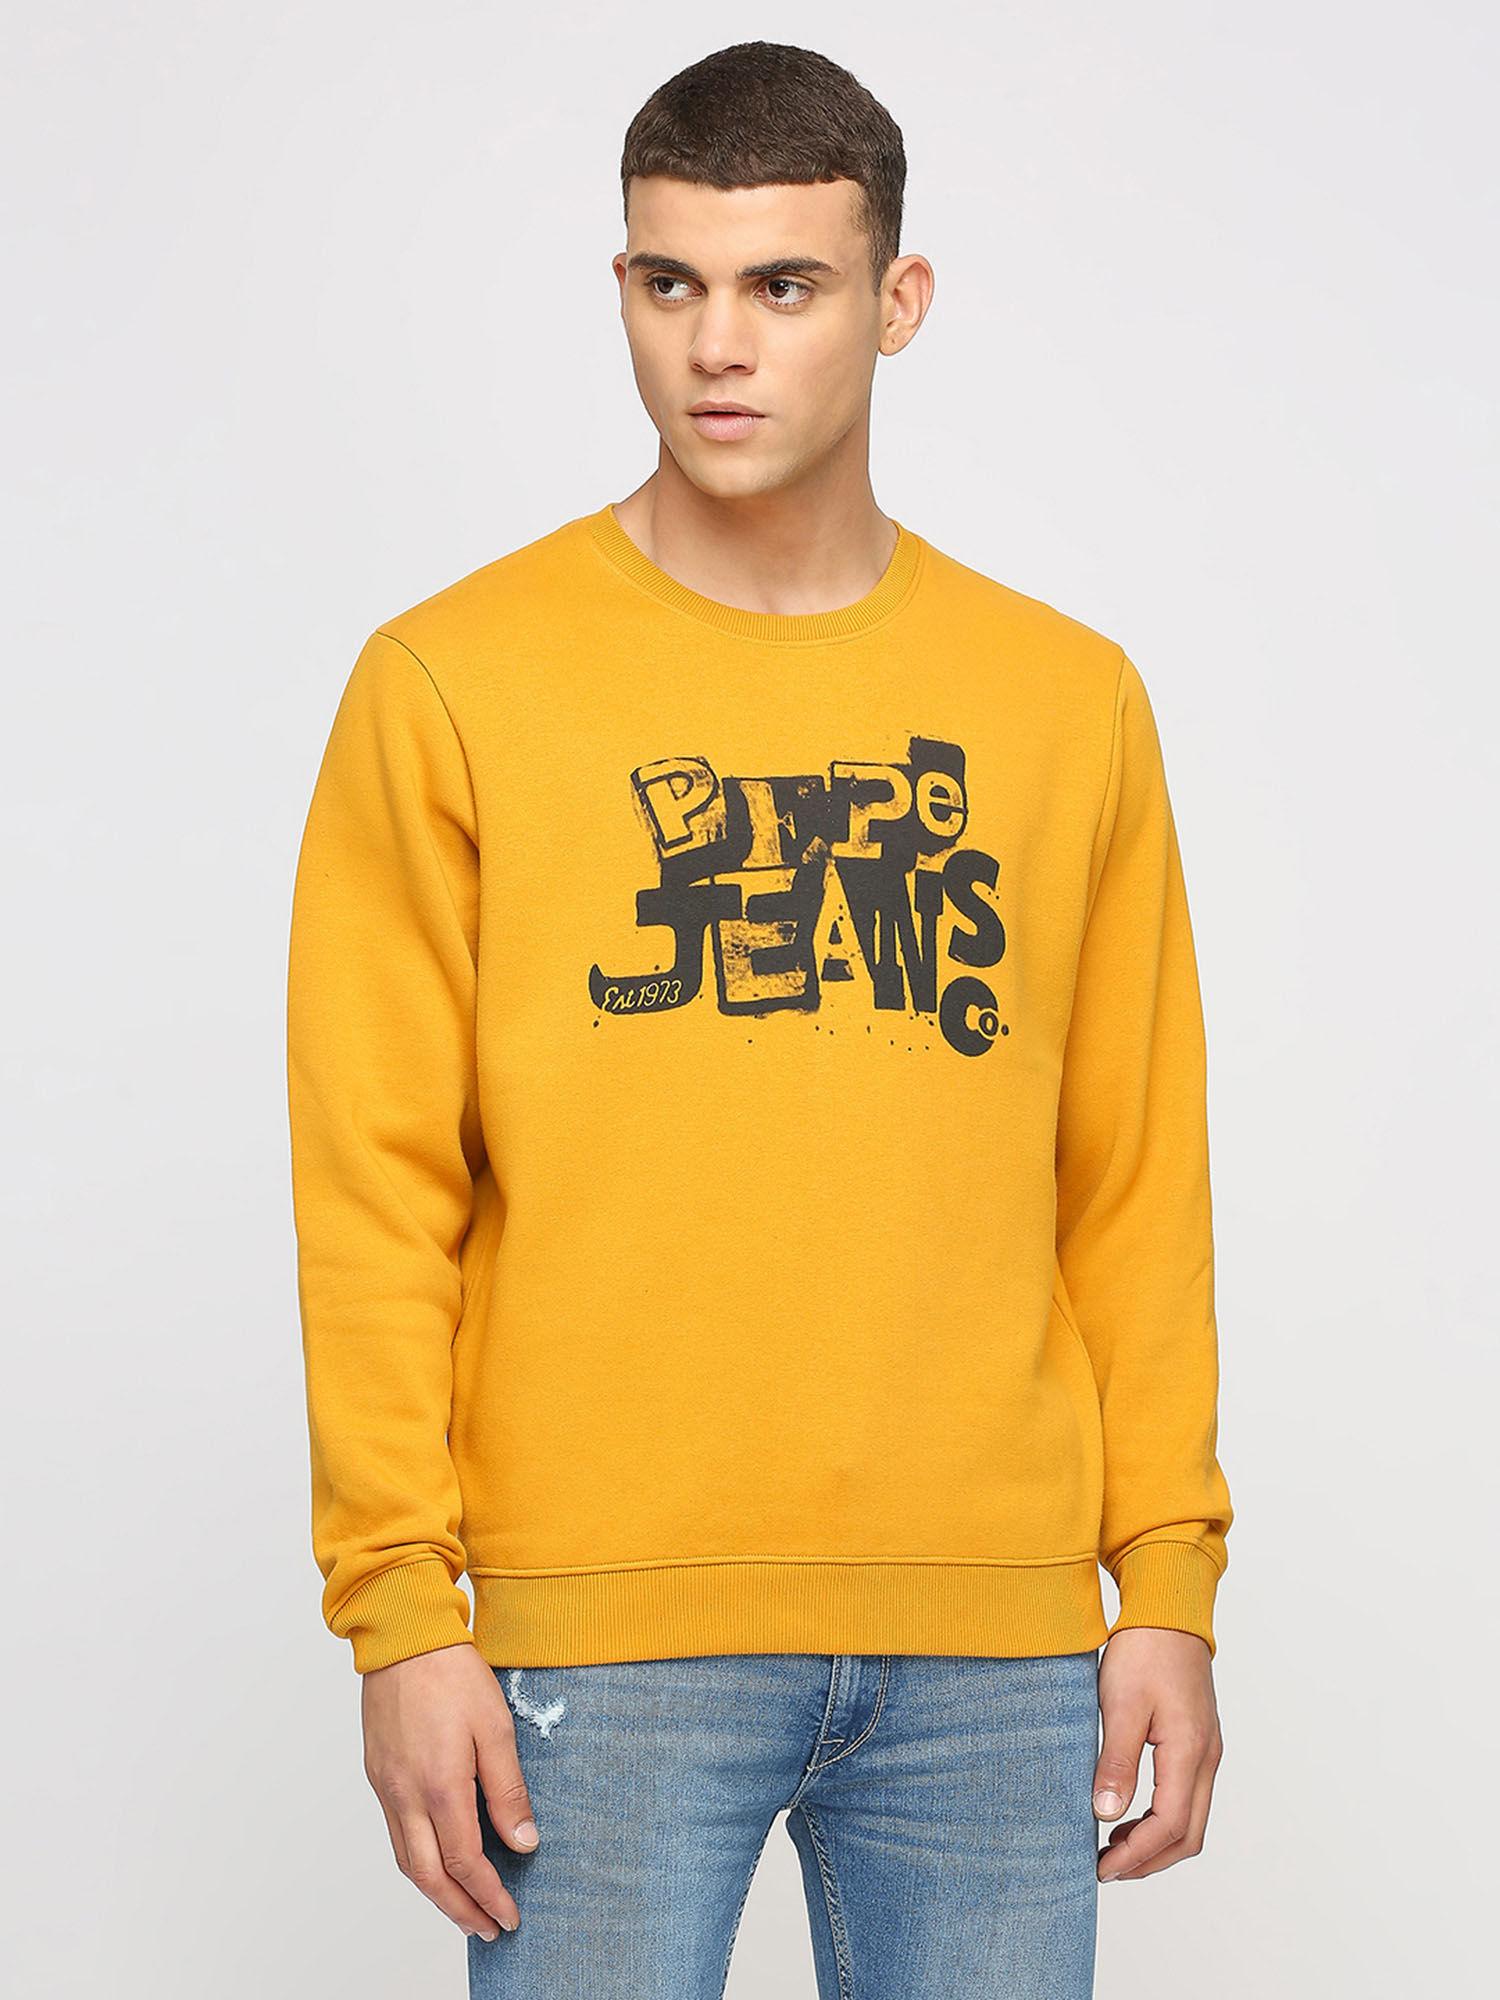 karl brand carrier sweatshirt yellow